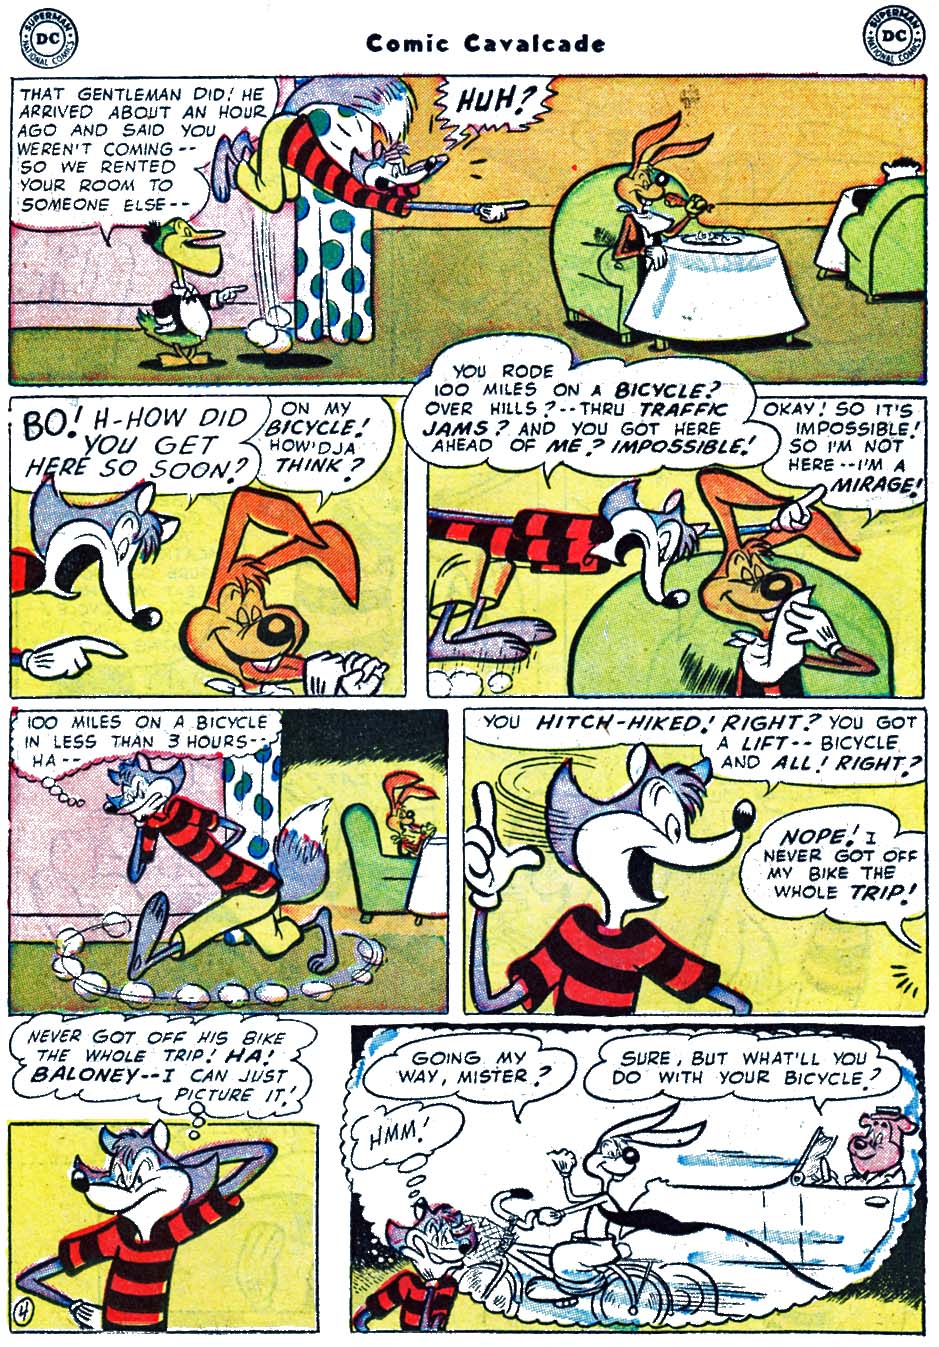 Comic Cavalcade issue 60 - Page 19